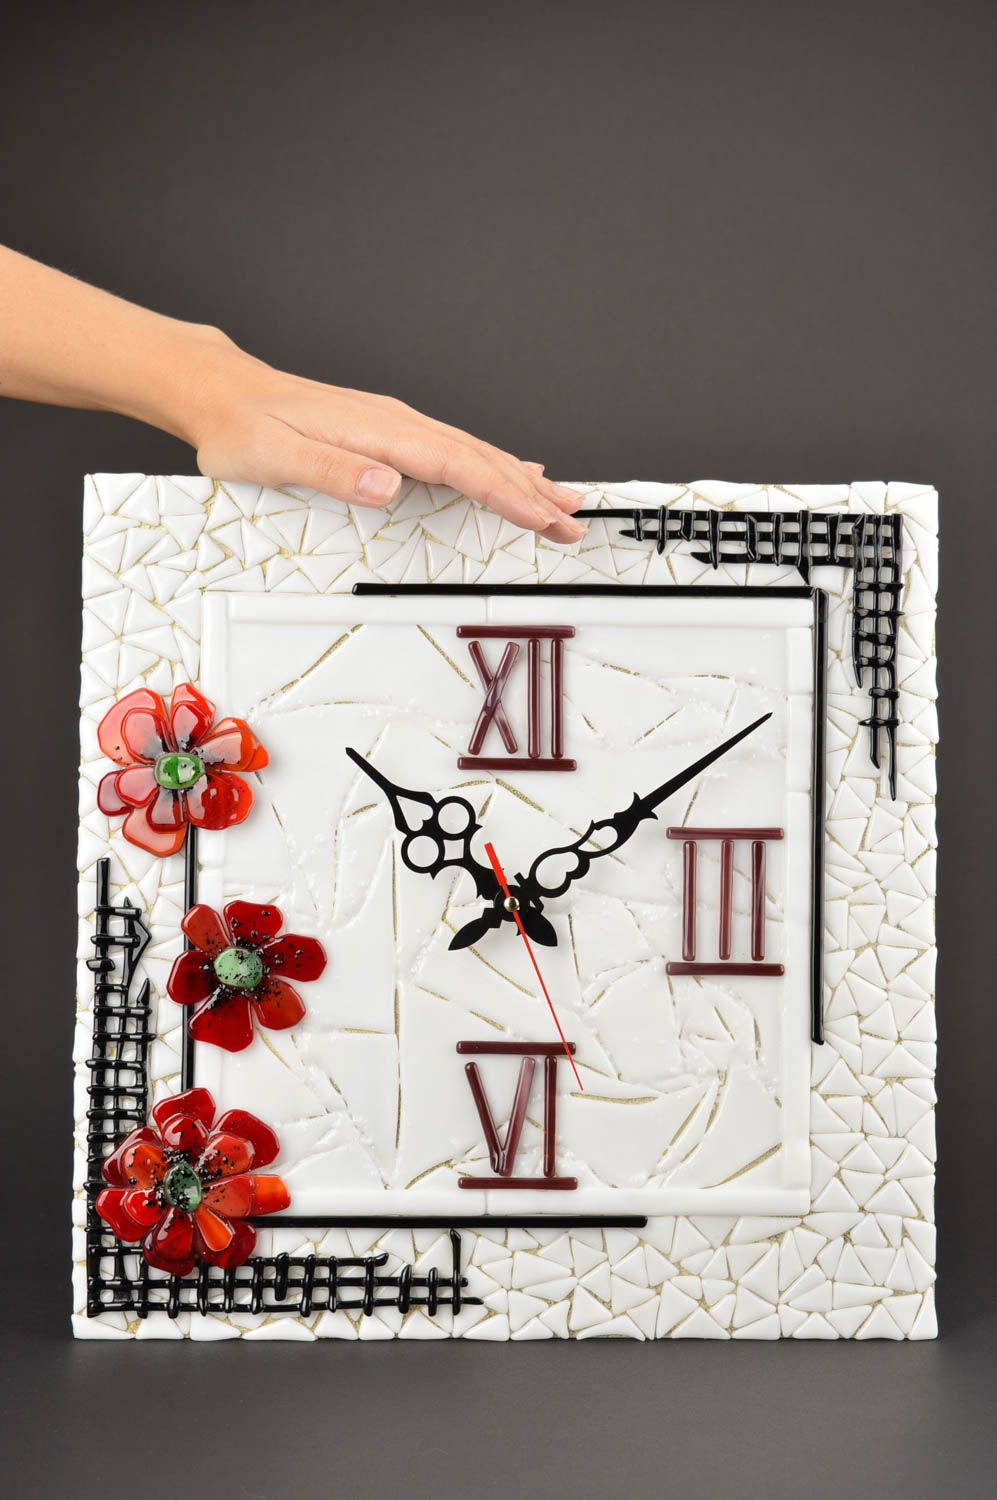 Handmade glass clock wall clock stylish accessories wall decor decor use only photo 5